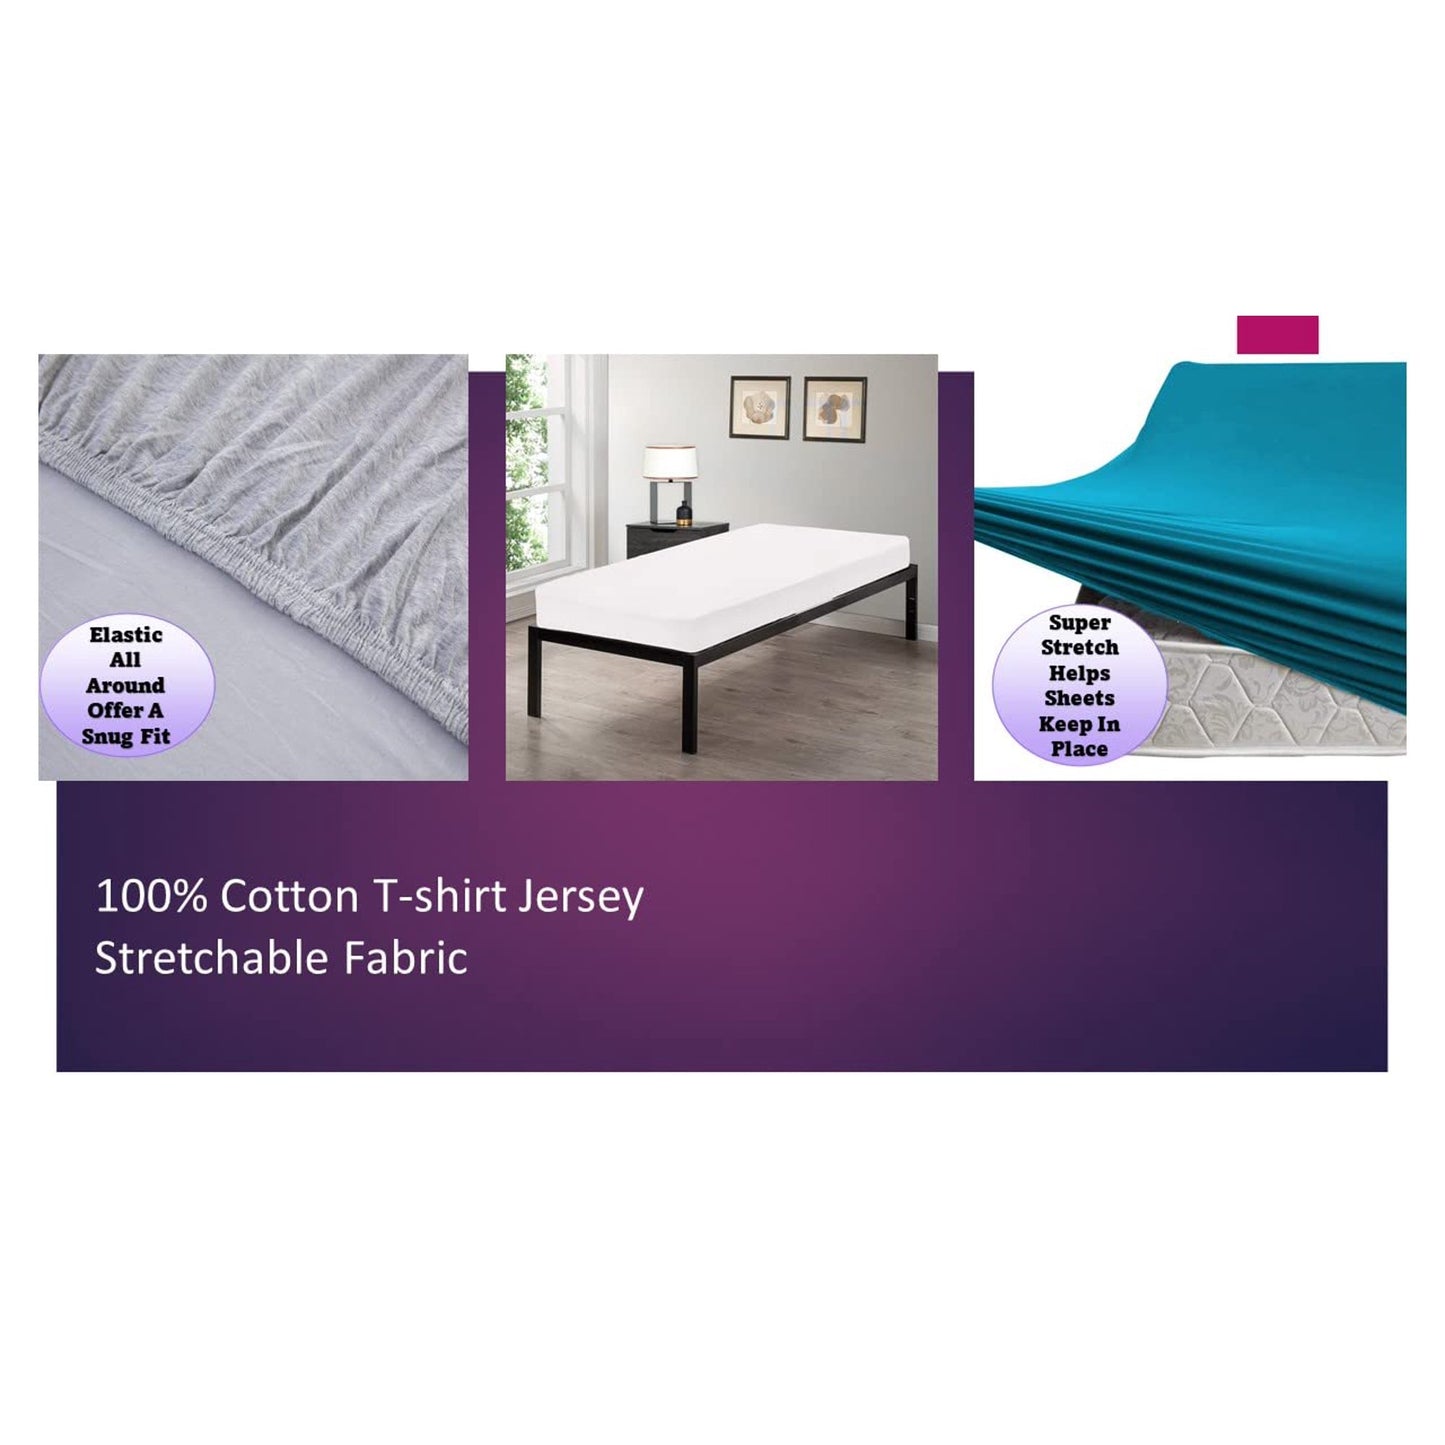 100% Combed T-Shirt Cotton Jersey Knit Camp Sheet Set, 1 Fitted cot Sheet, 1 Flat Sheet, 1 Standard Pillow case Twin Size 39"X75", Hot Pink